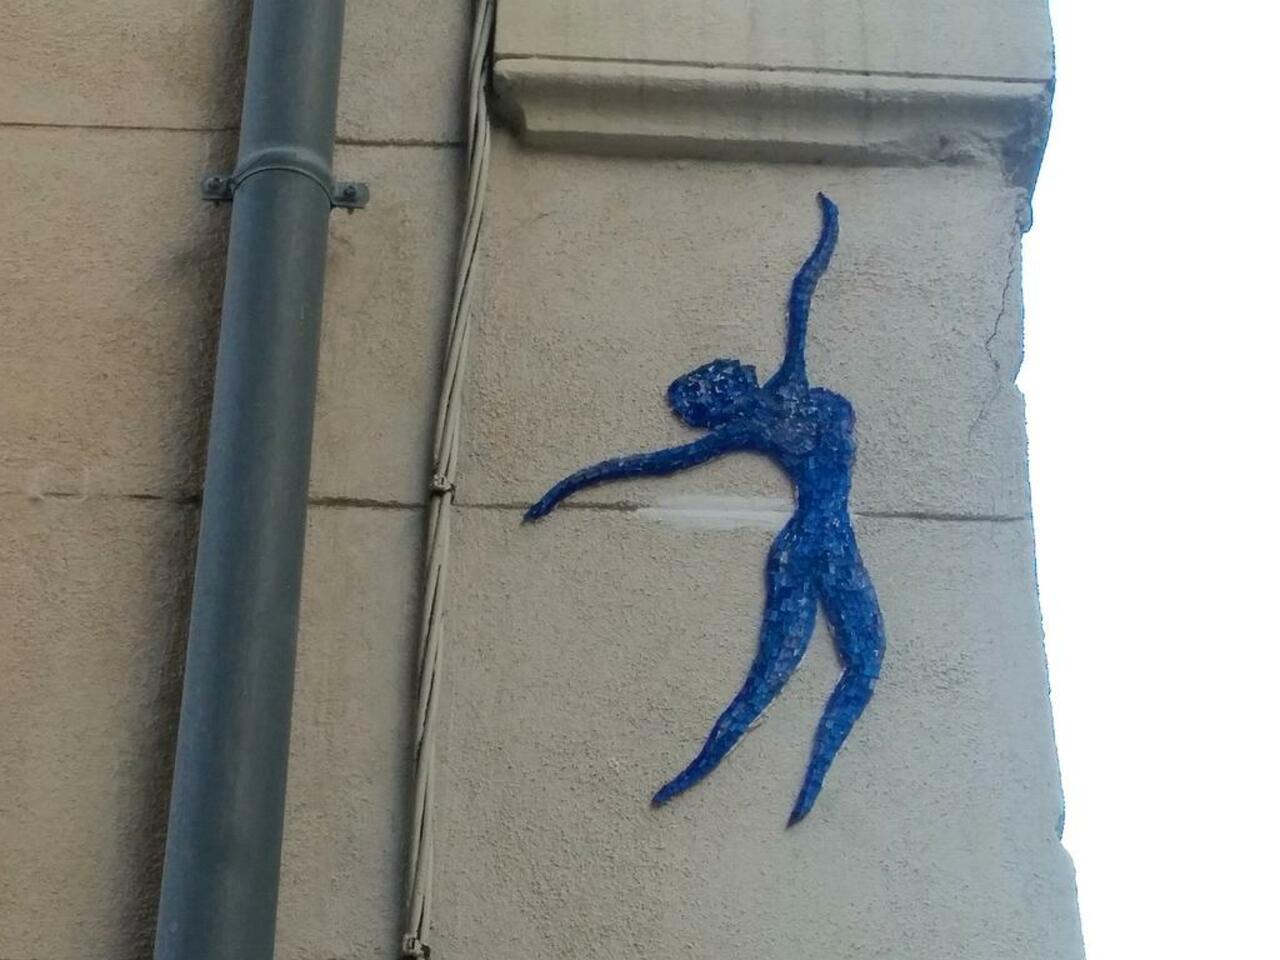 Street Art by anonymous in #Marseille http://www.urbacolors.com #art #mural #graffiti #streetart http://t.co/EvSadszrSJ